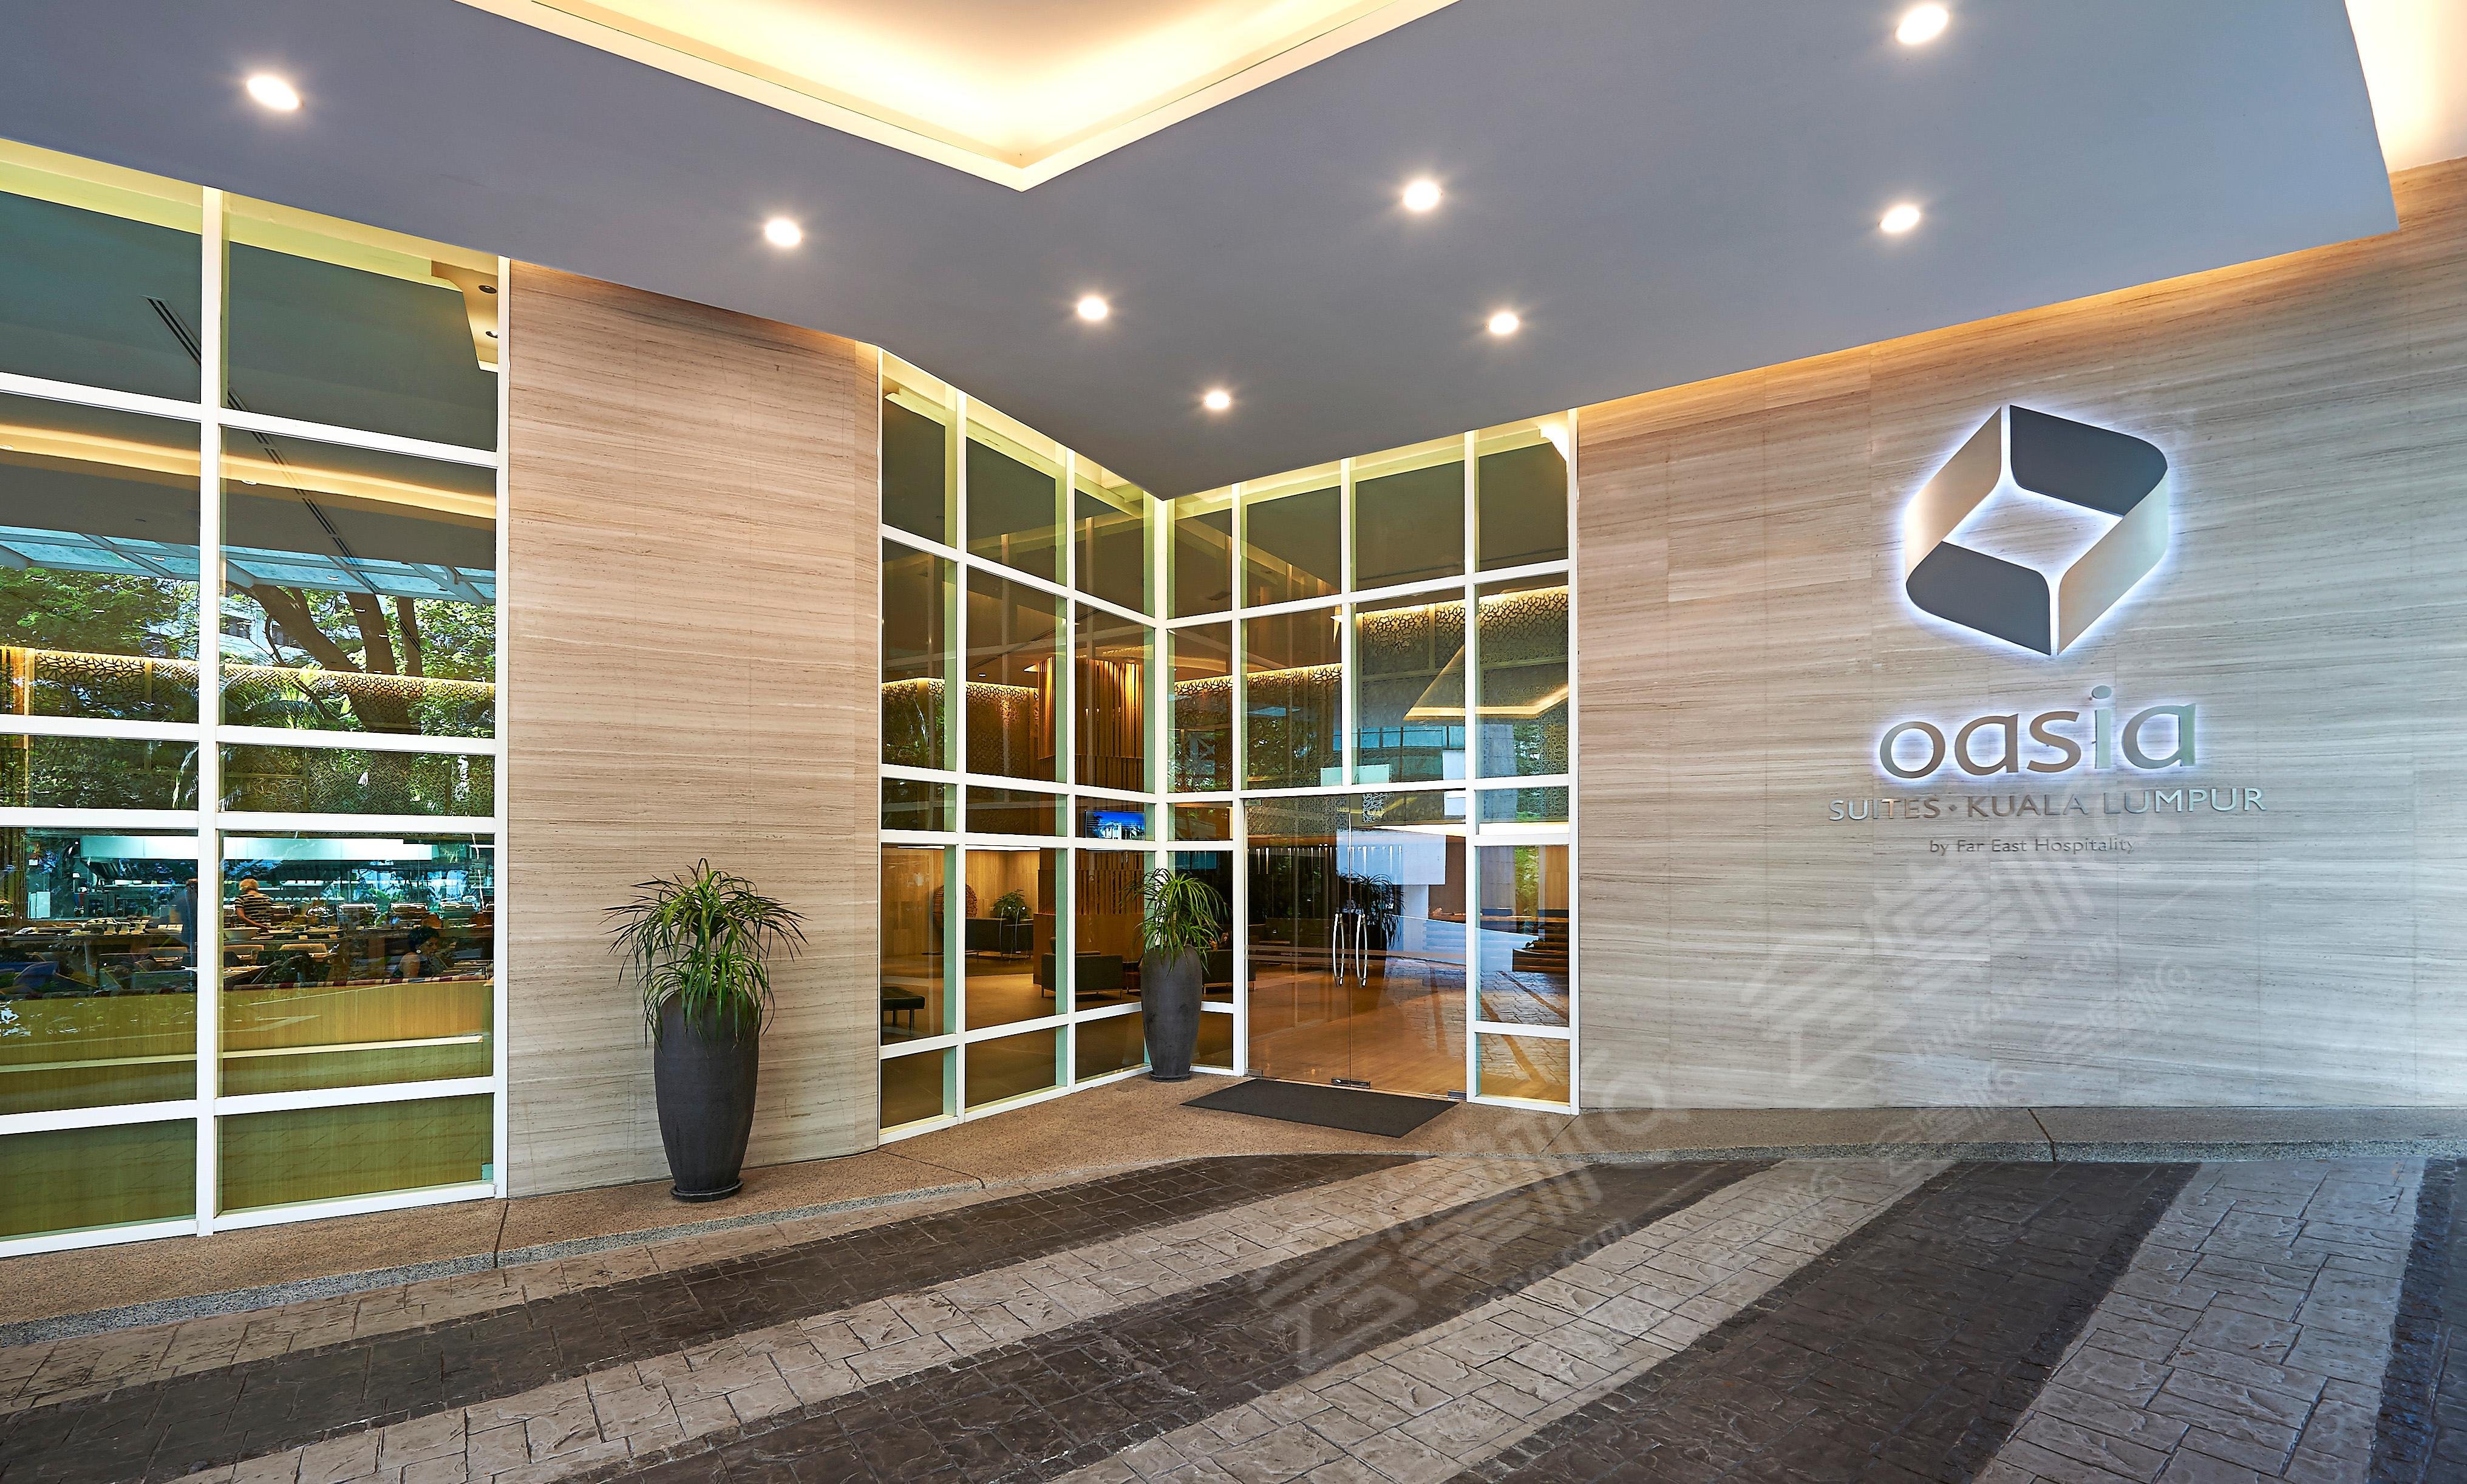 吉隆坡豪亚酒店式公寓 - 远东酒店集团旗下(Oasia Suites Kuala Lumpur by Far East Hospitality)